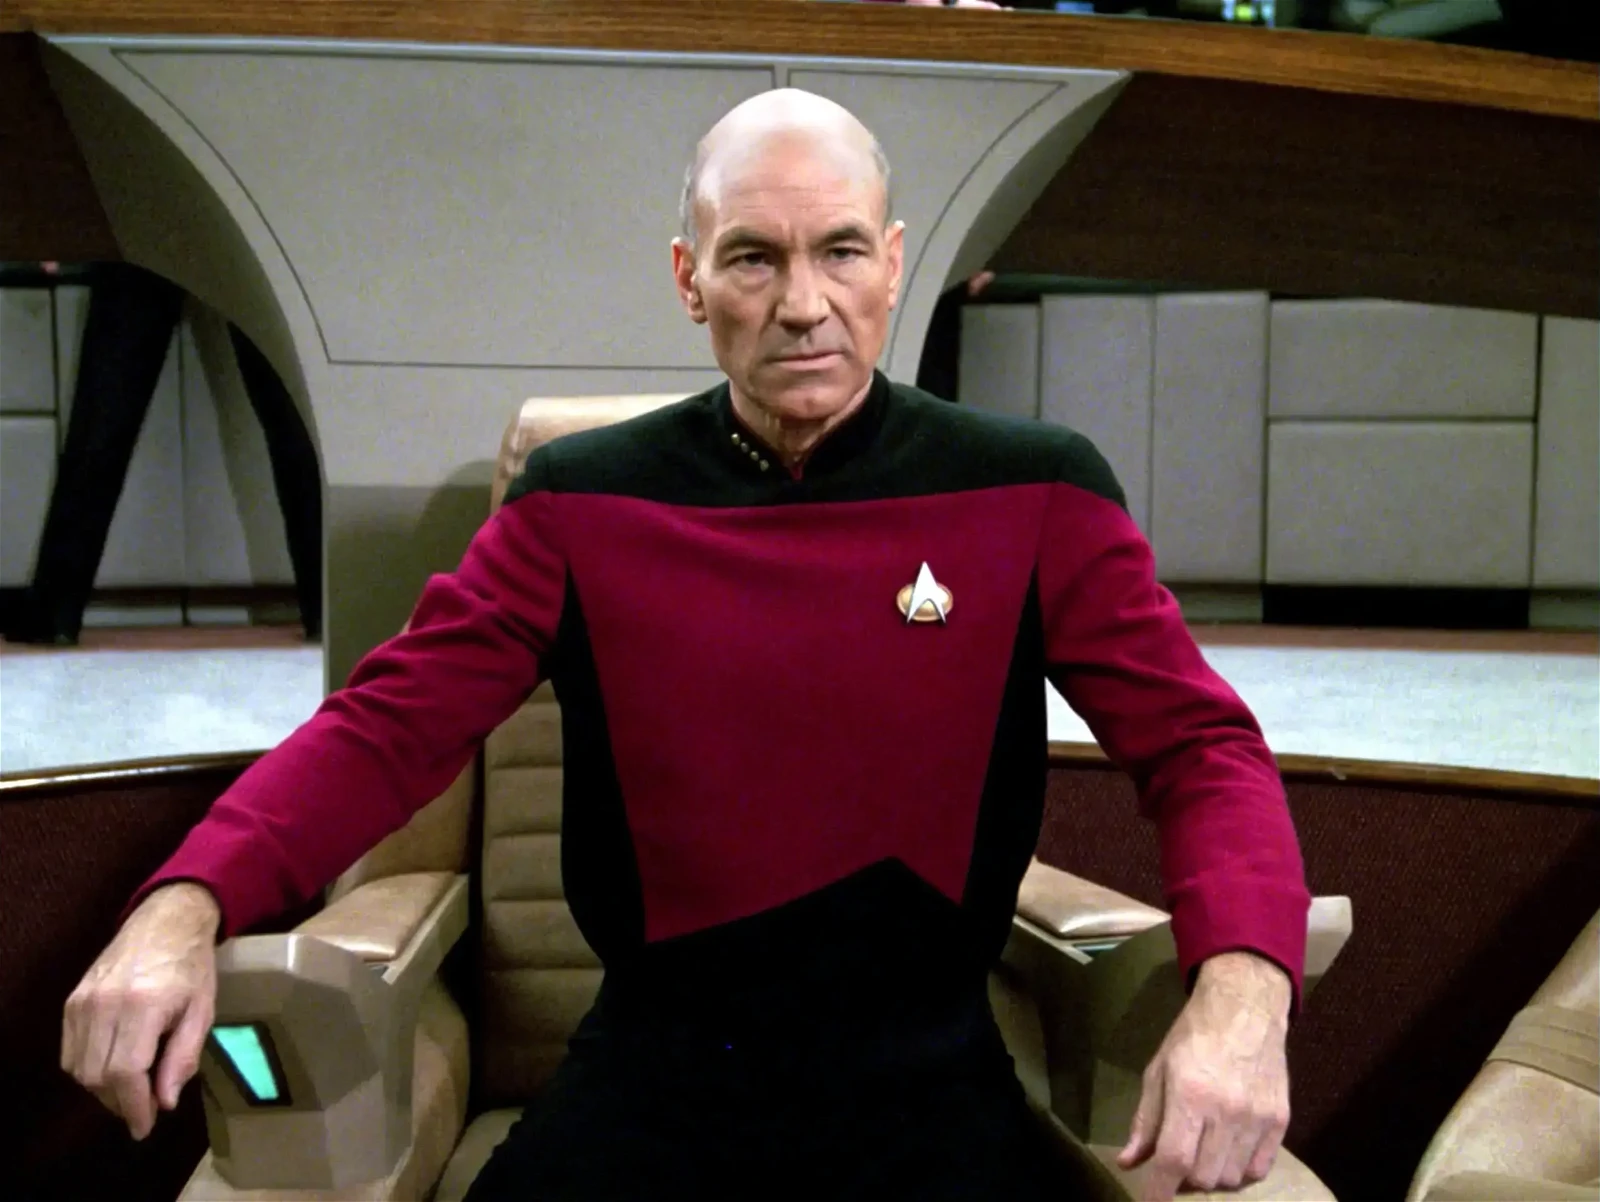 Stewart as Captain Picard in Star Trek: The Next Generation